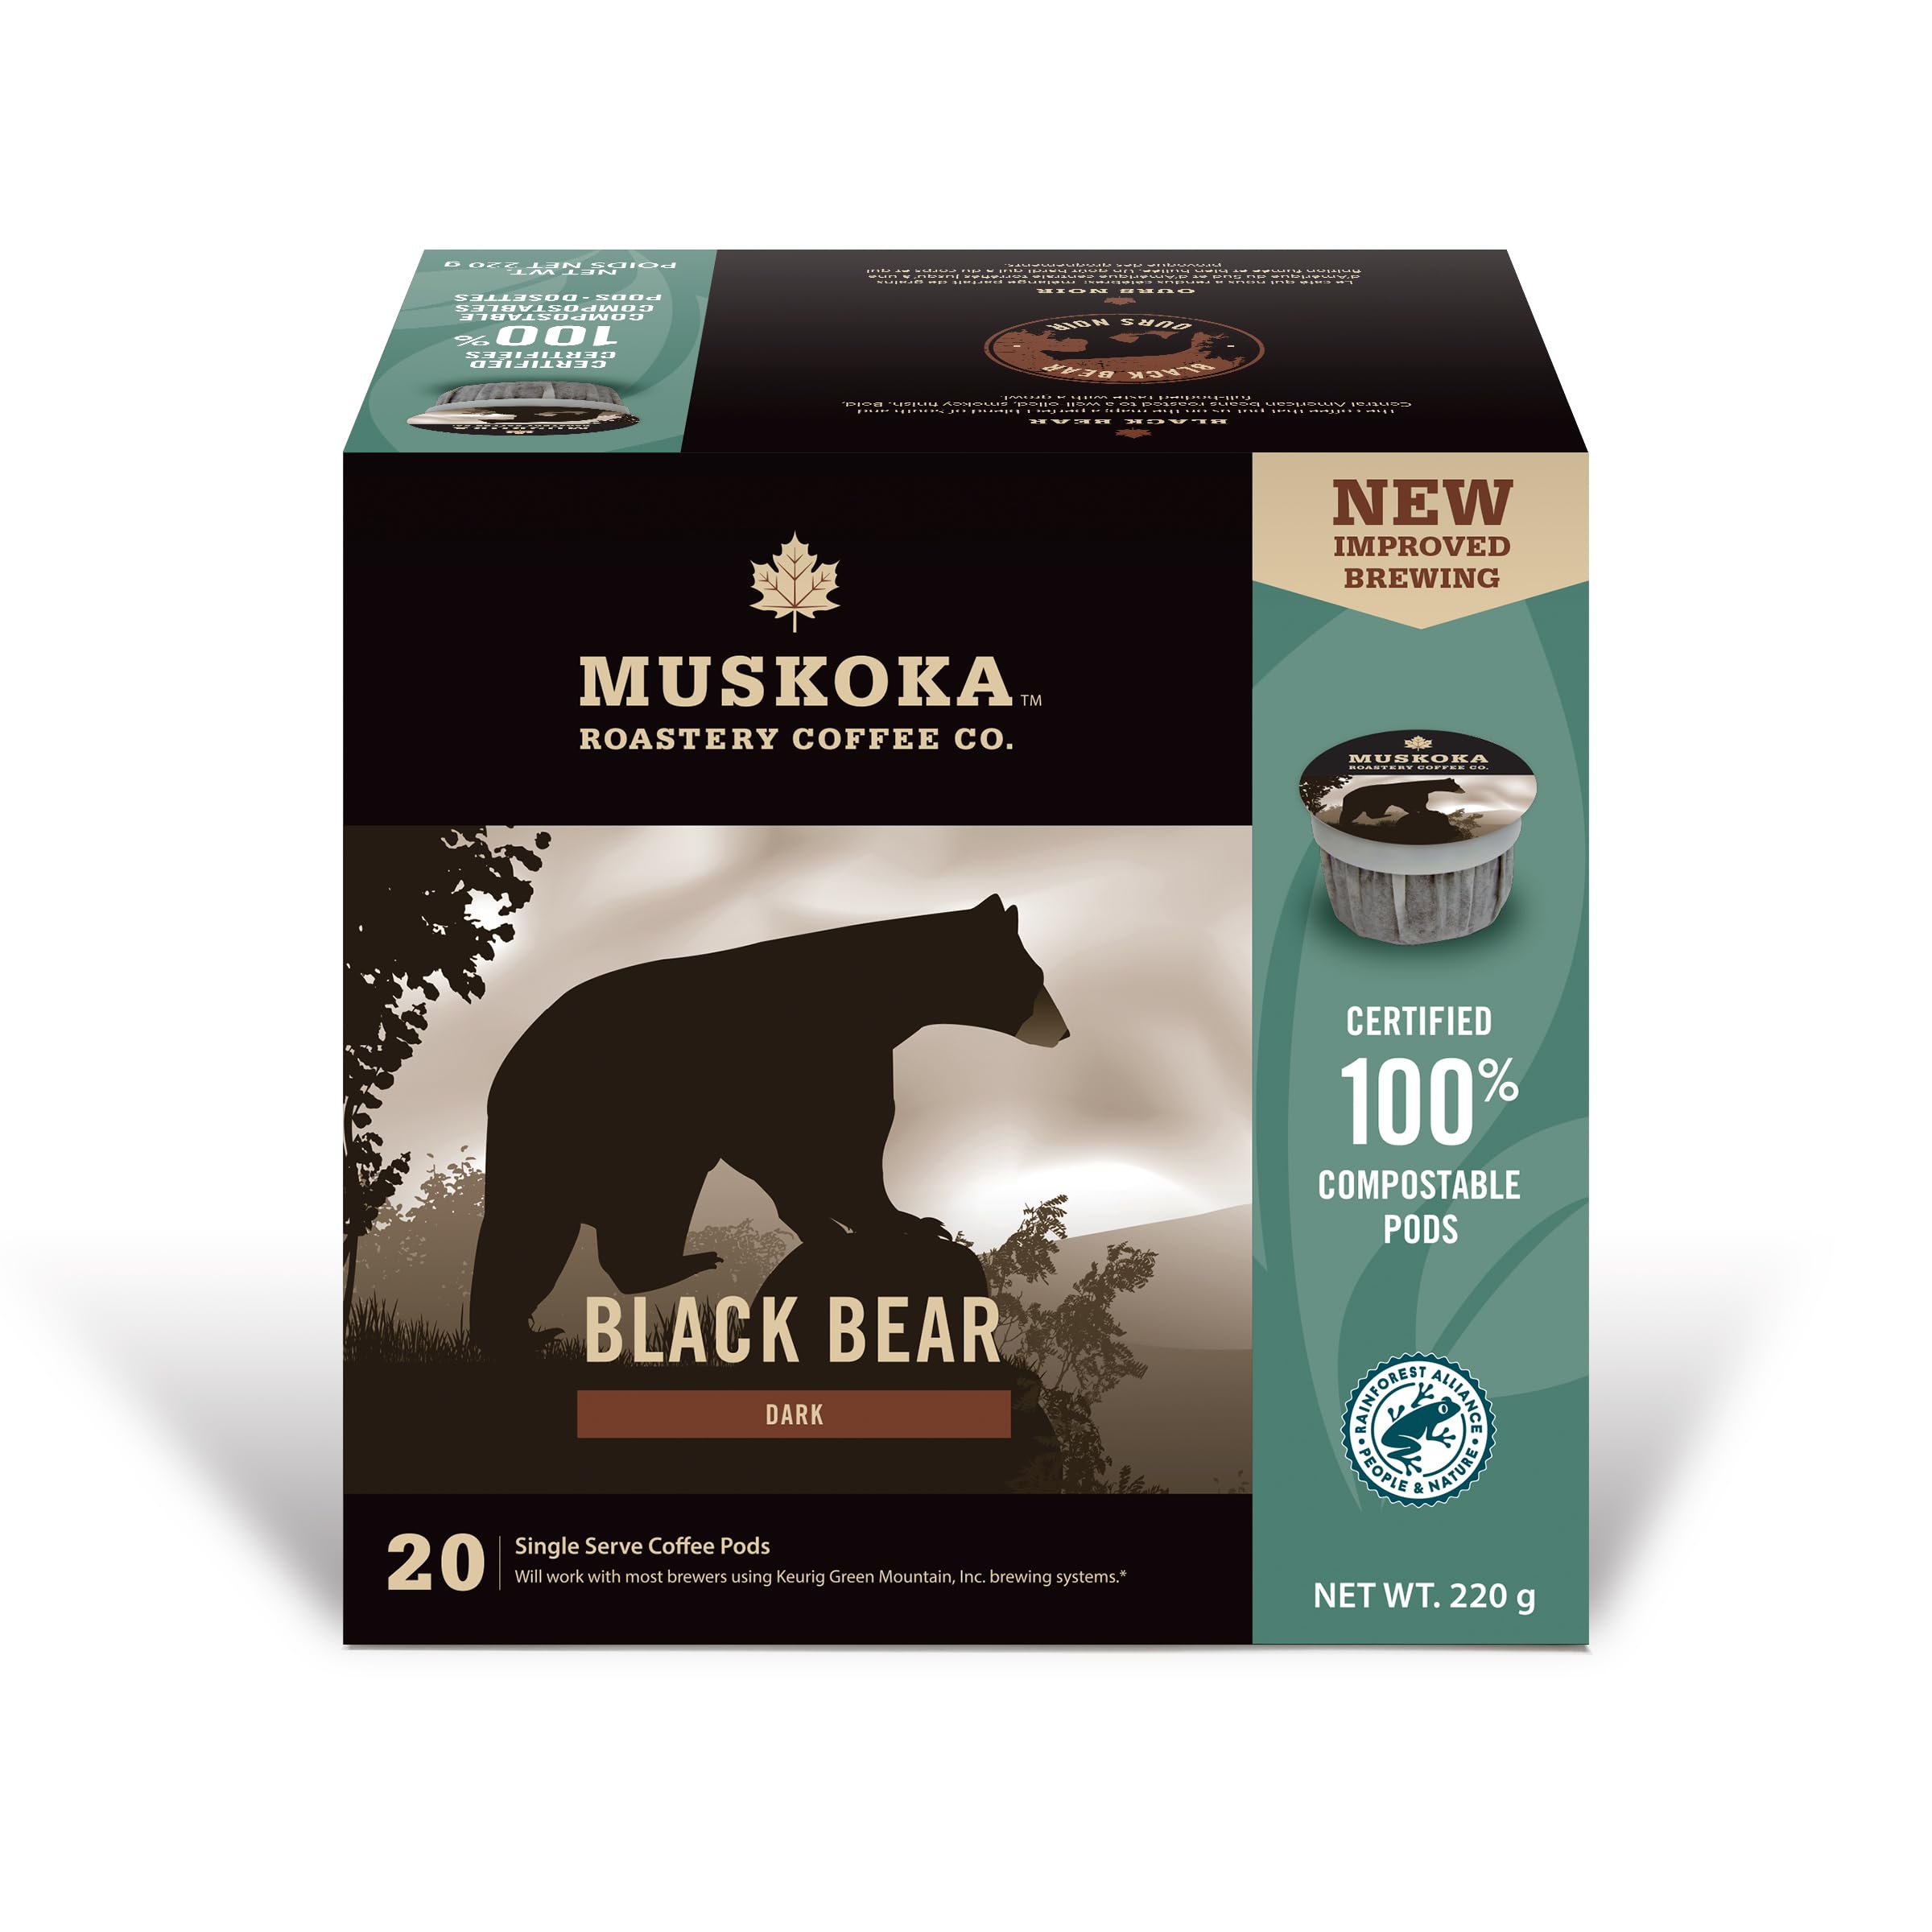 Muskoka Roastery Coffee, Black Bear, Dark Roast, 20 Single Serve Coffee Pods, Compatible with K-Cup Keurig Brewers